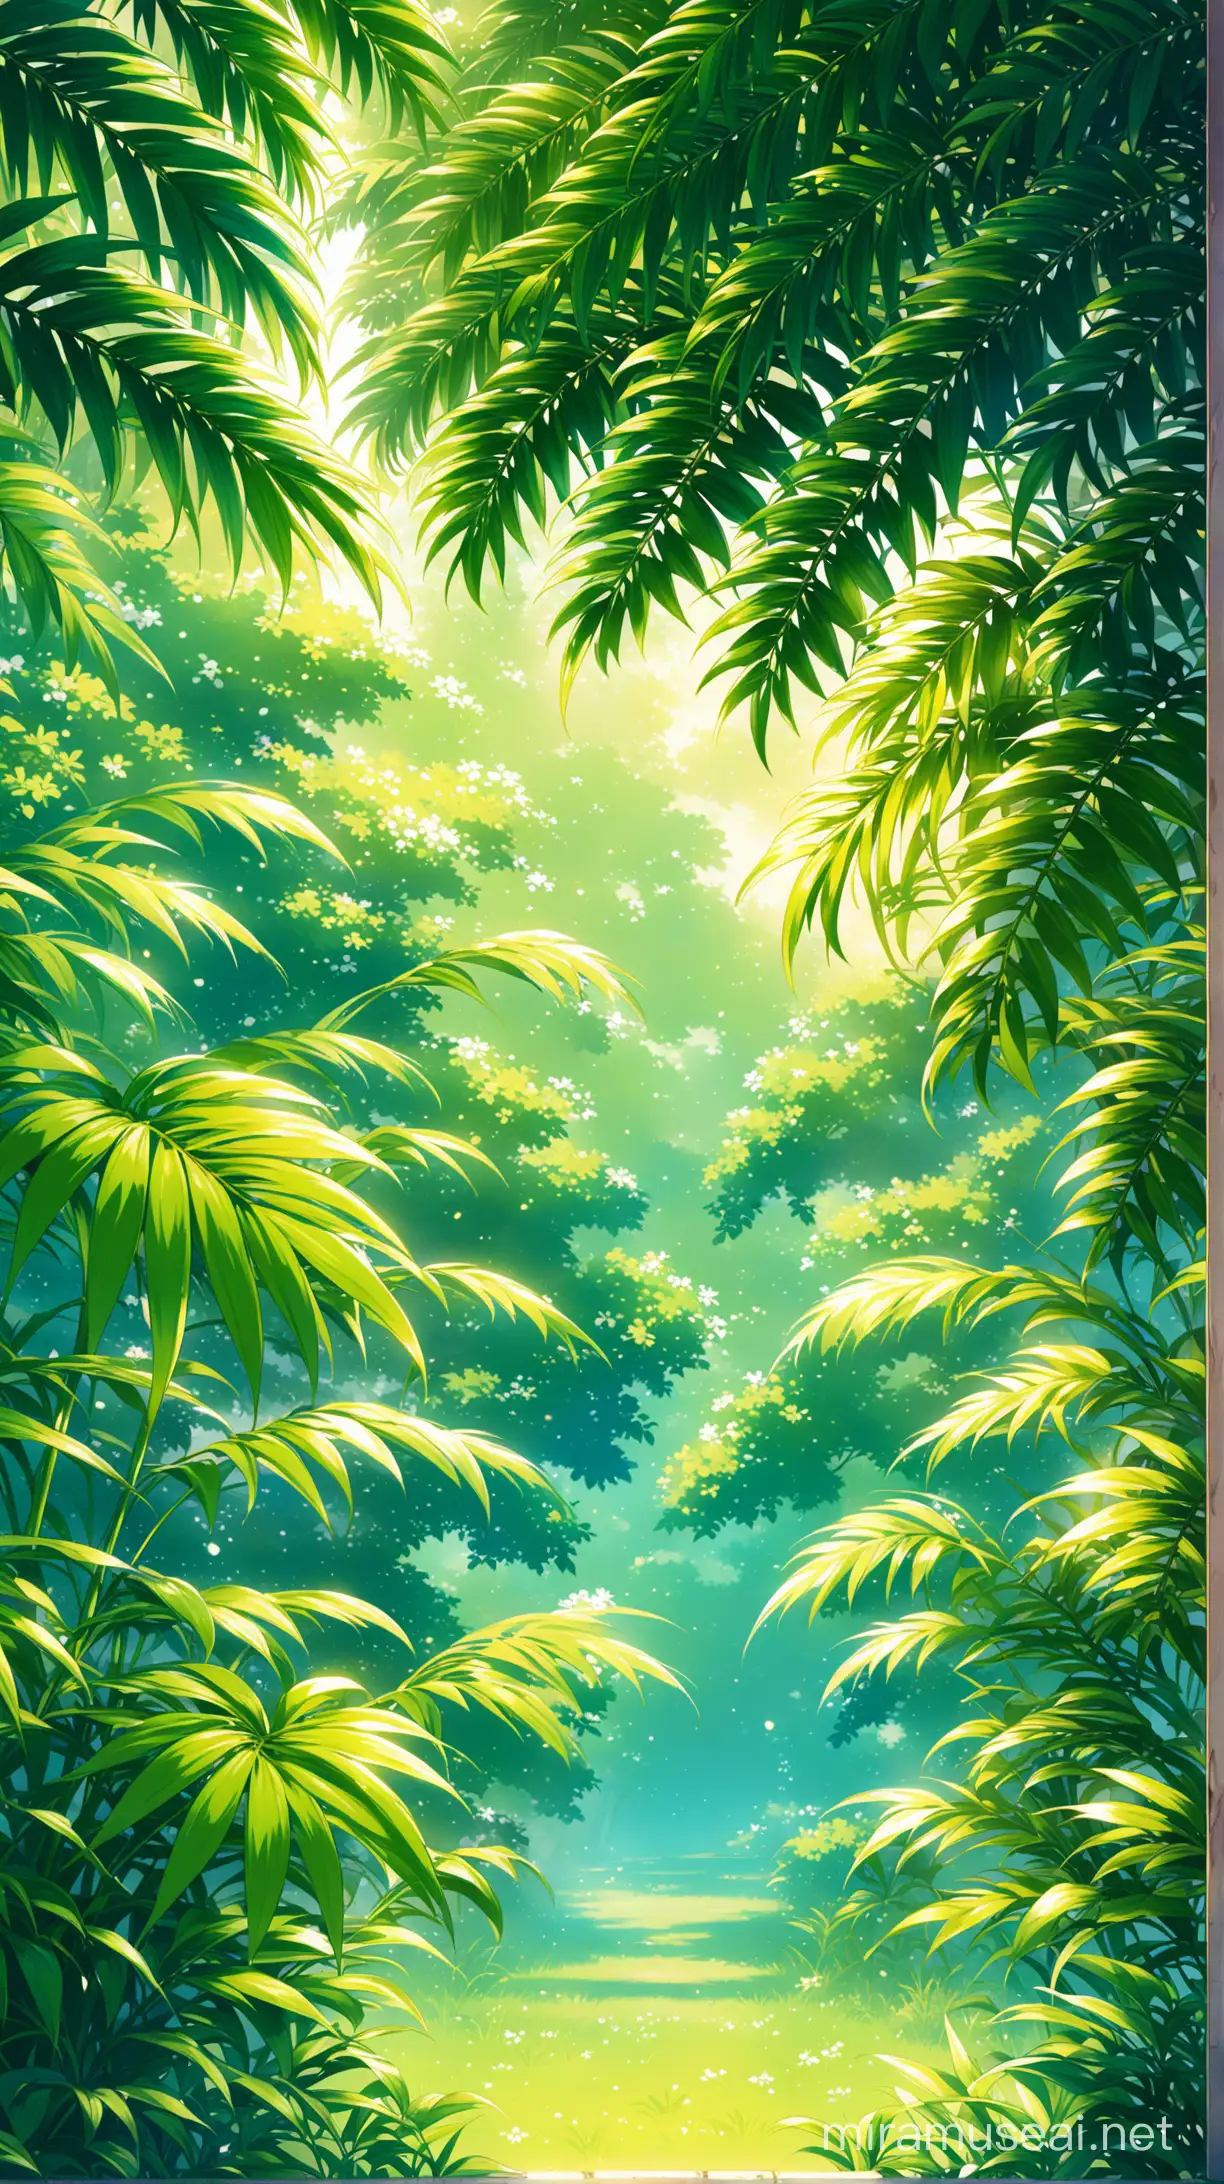 Fantasy Anime Plants Wallpaper Magical Botanical Scene with Vibrant Colors